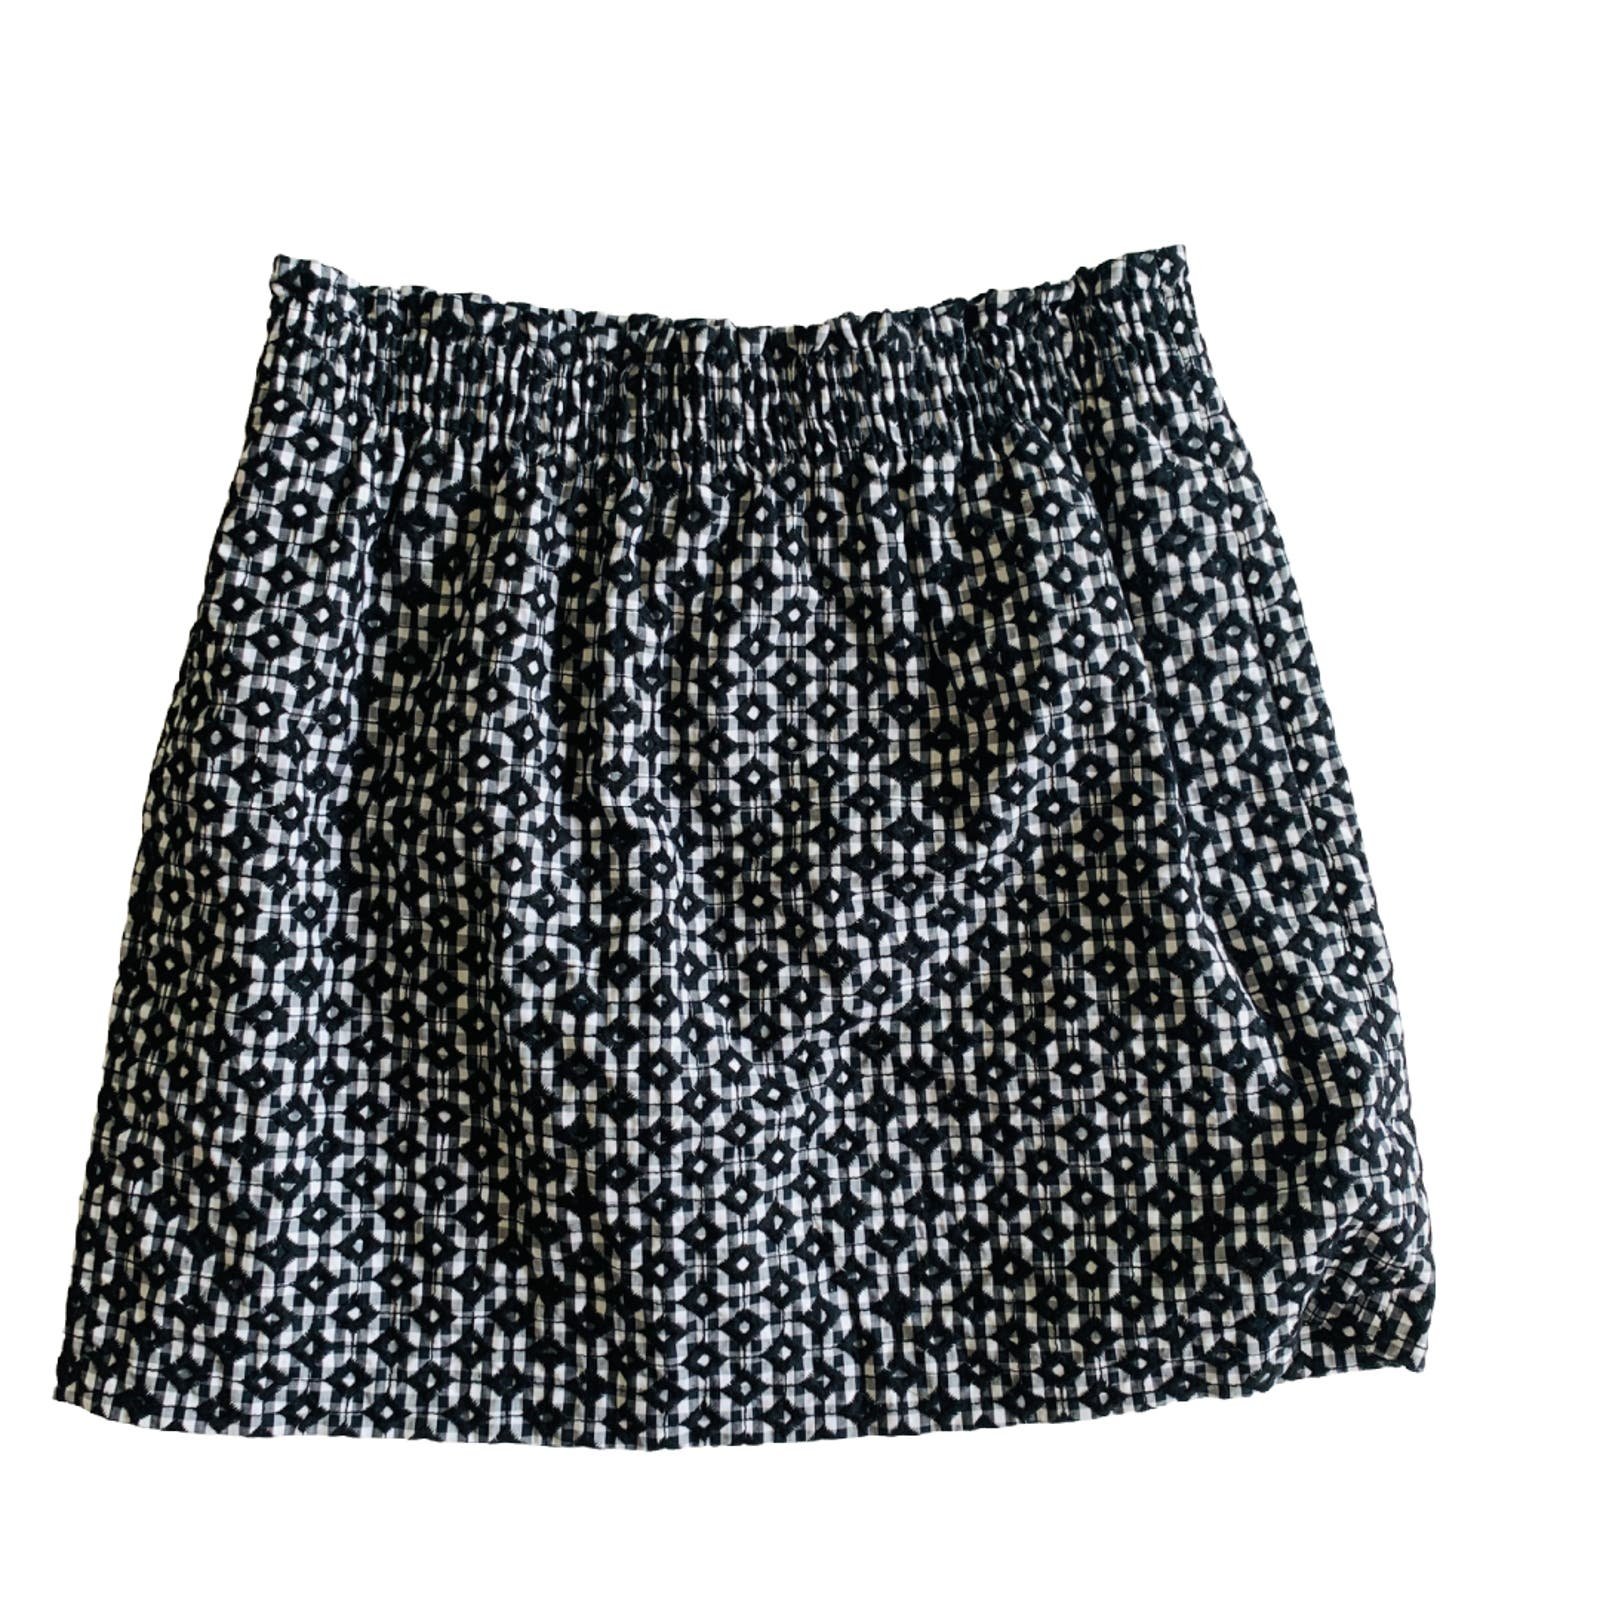 Classic J. Crew Embroidered Sidewalk Skirt in Gingham Black + White Size 8 NWT oOjv7kXSv High Quaity